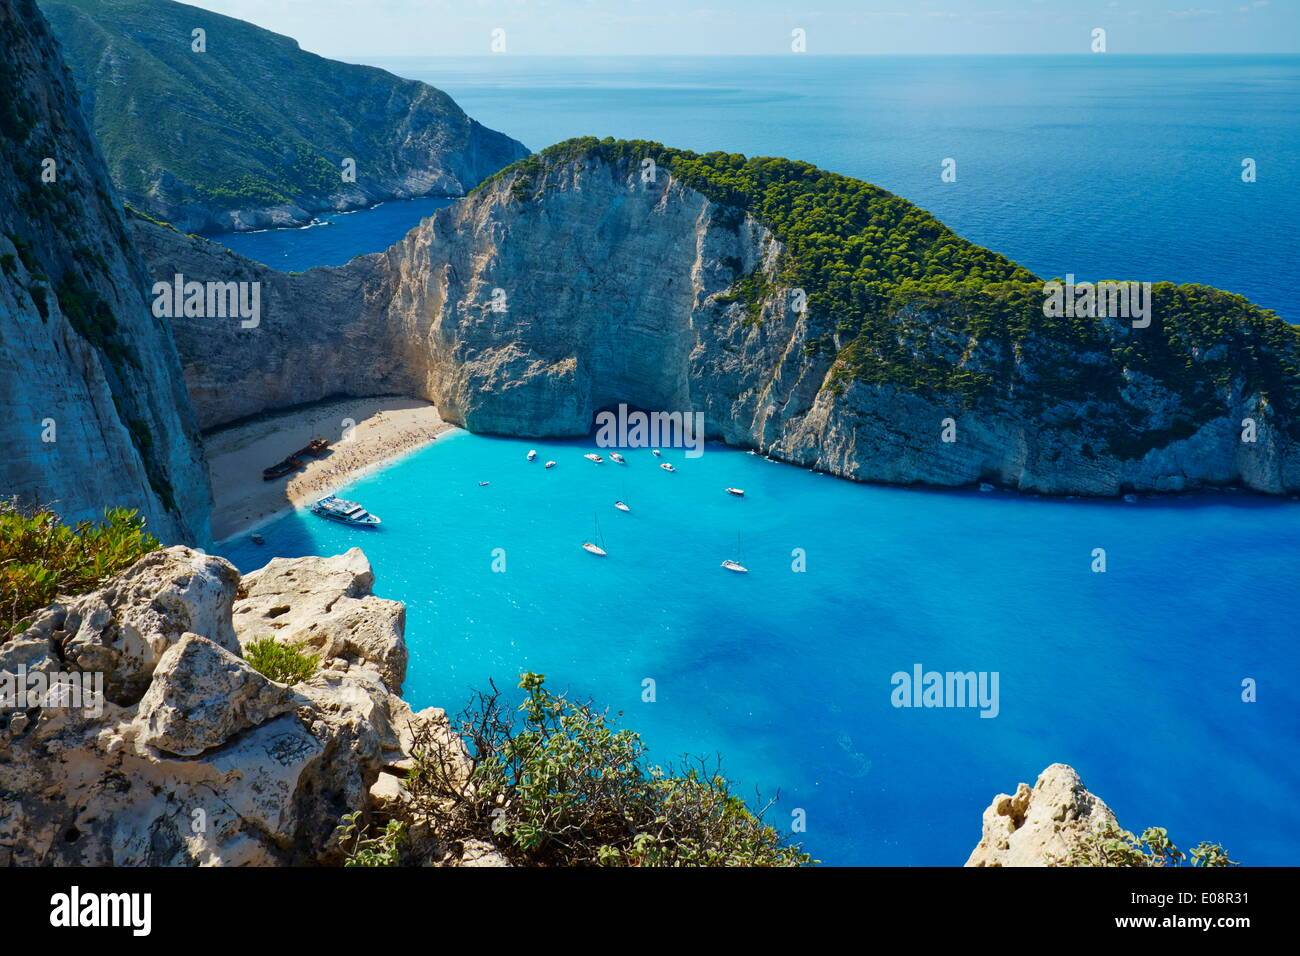 shipwreck-beach-zante-island-ionian-islands-greek-islands-greece-europe-E08R31.jpg